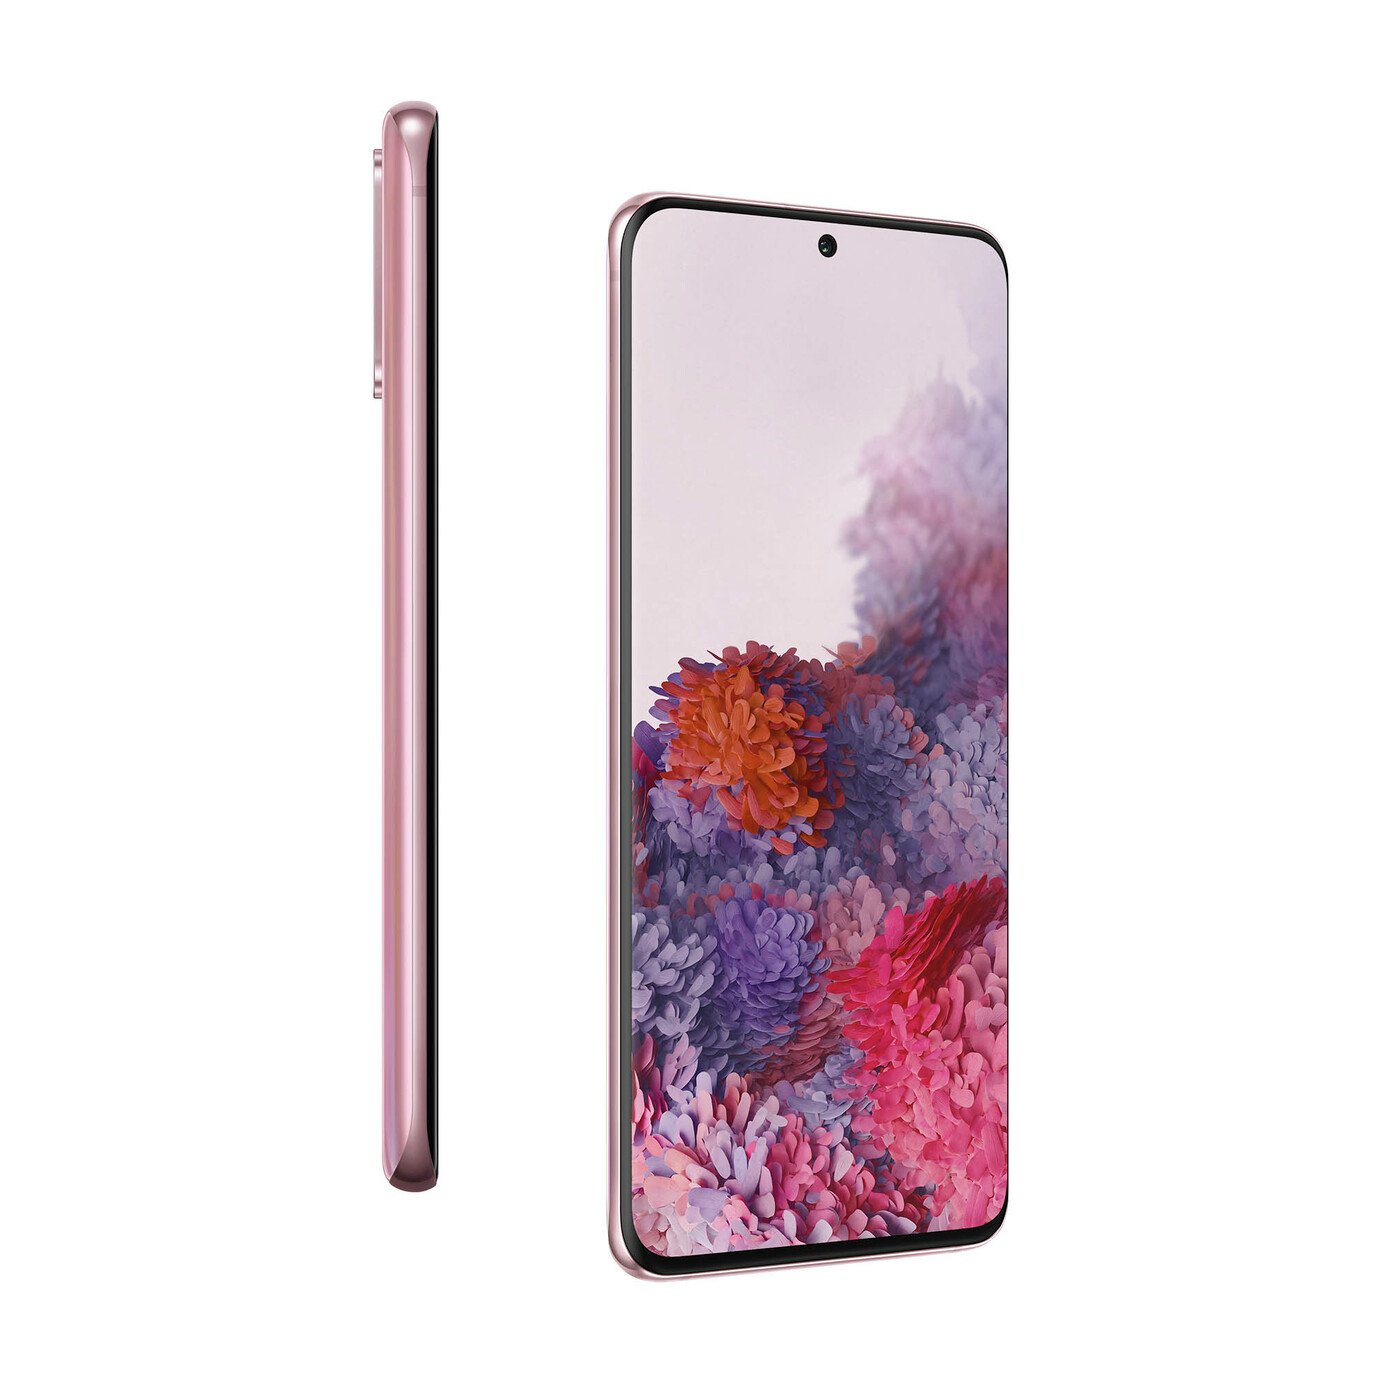 SIM Free Samsung Galaxy S20 128GB 4G Mobile Phone-Cloud Pink Review